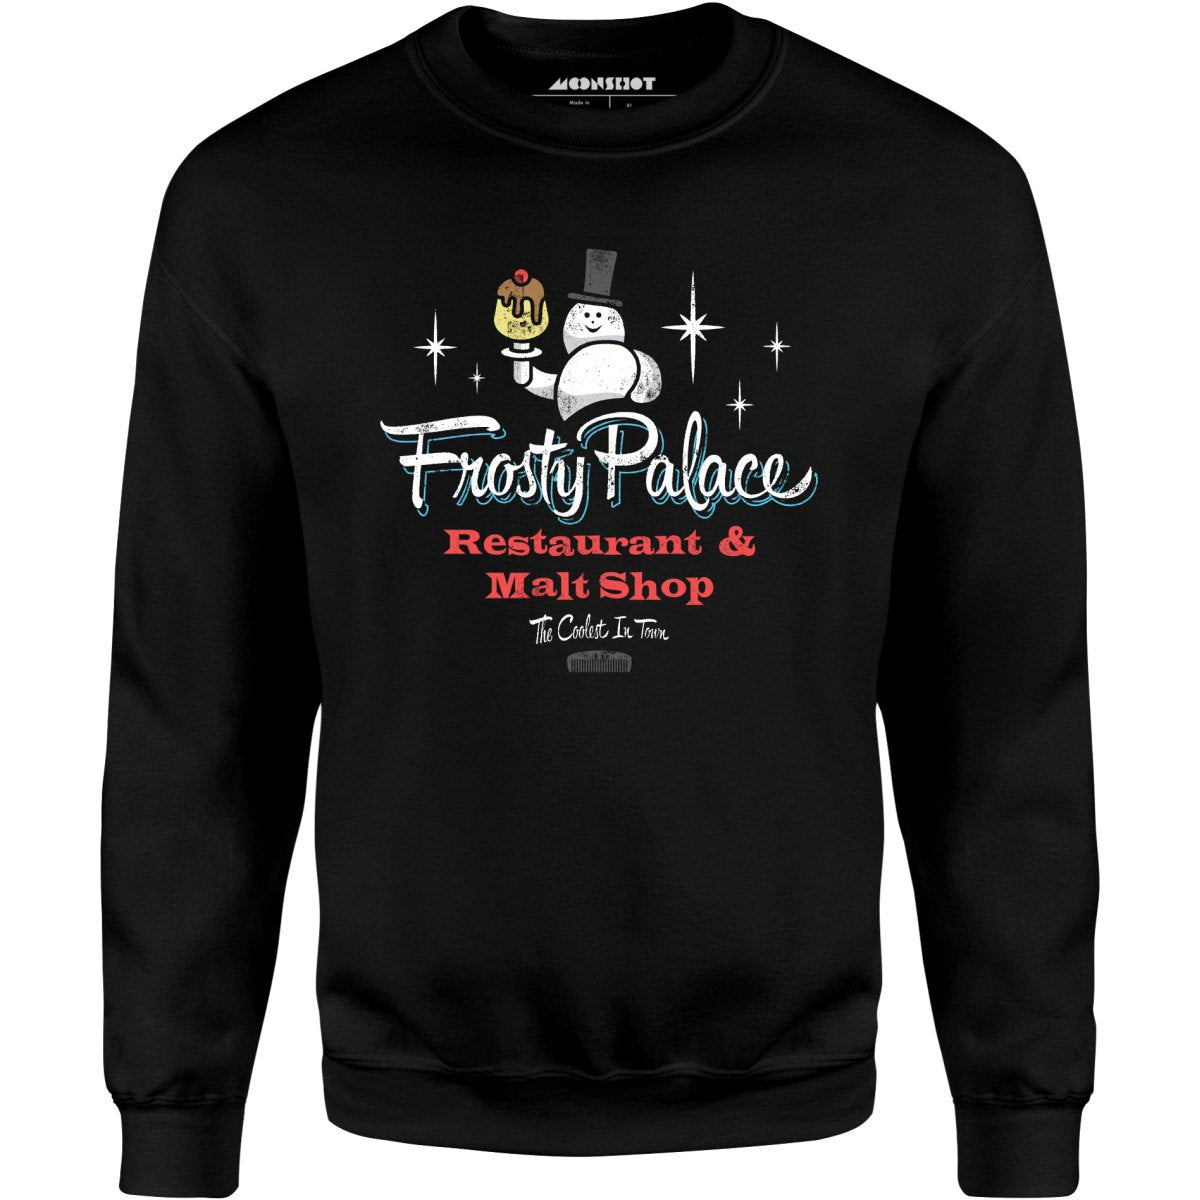 Frosty Palace Restaurant & Malt Shop - Unisex Sweatshirt